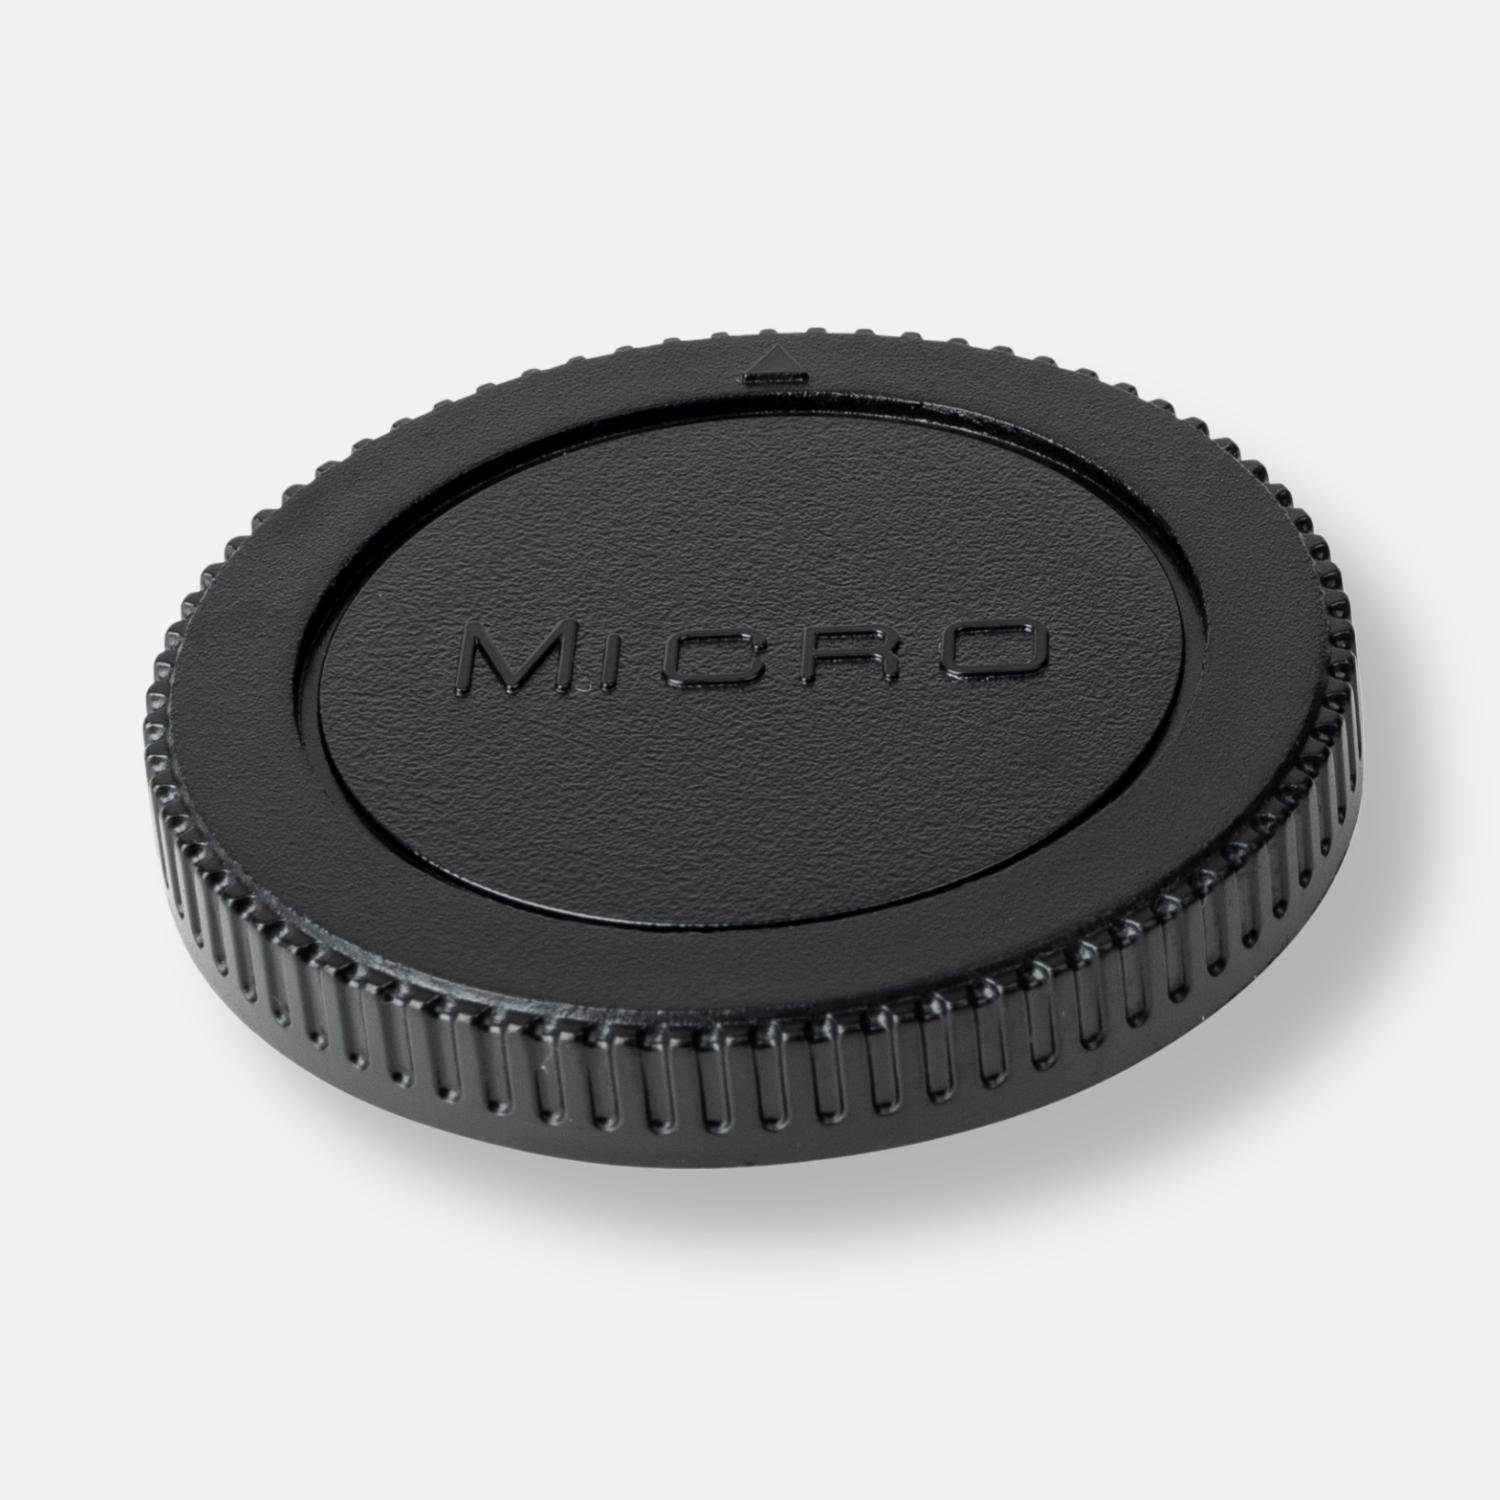 Lens-Aid Gehäusedeckel für Micro 4/3-Bajonett (M4/3), Body Cap, DSLR, Systemkamera